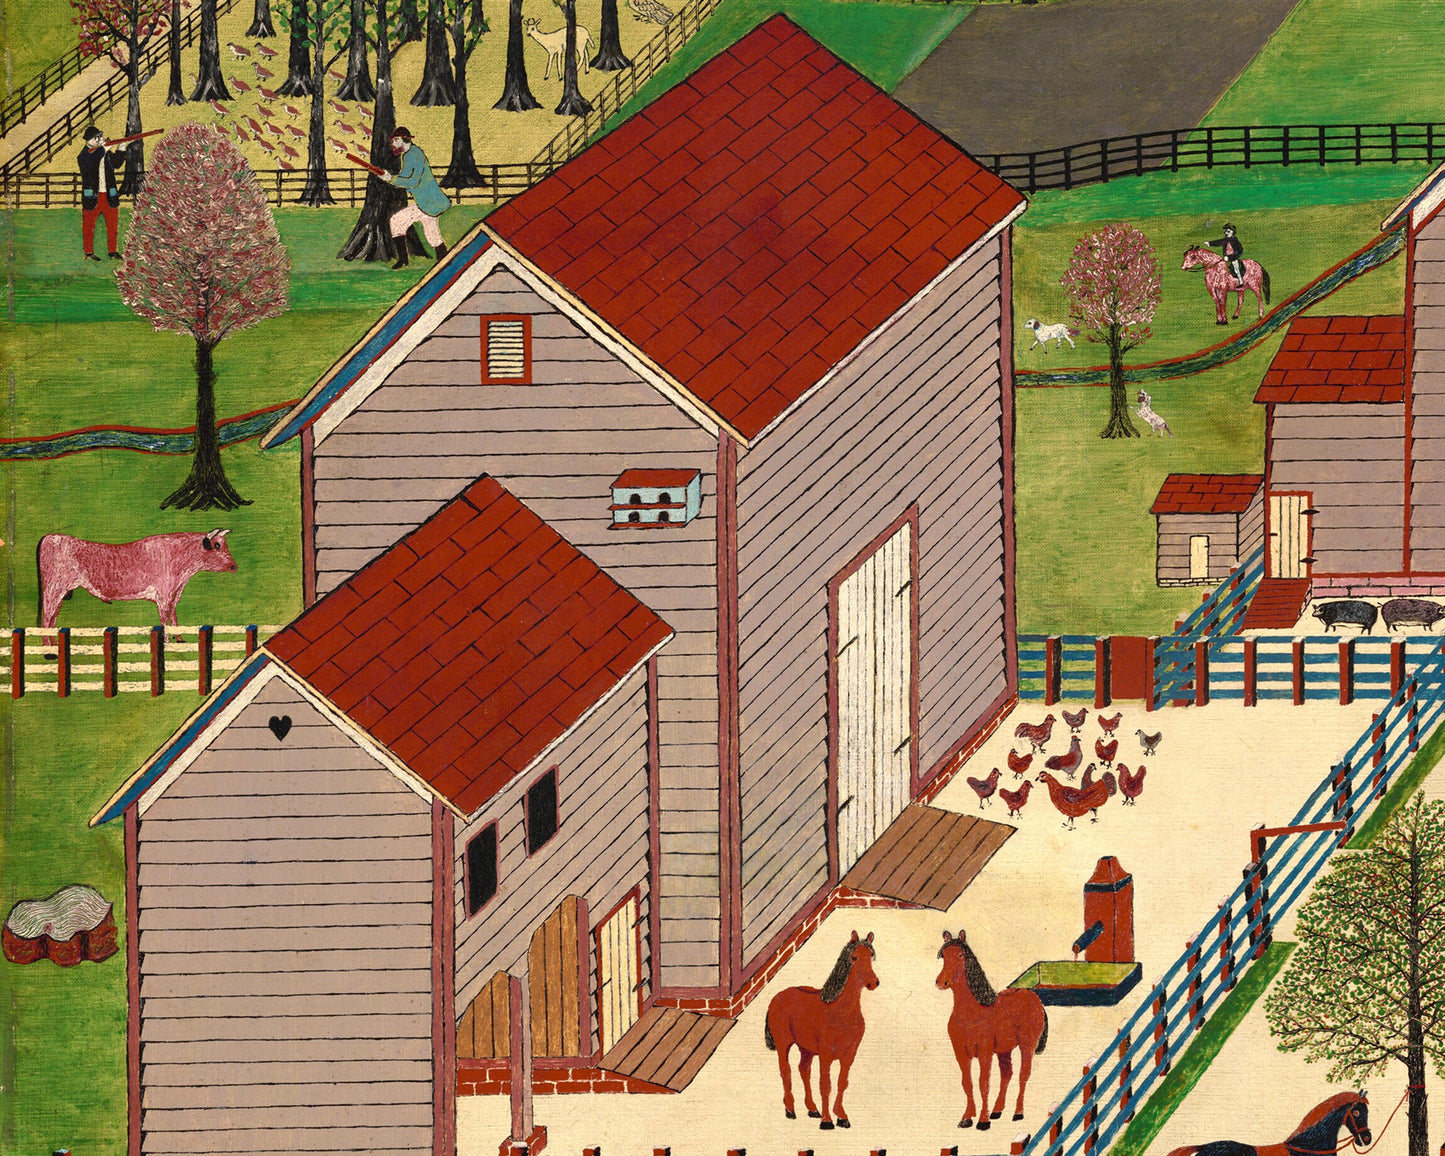 Americana folk art | Mahantango Valley Farm | Vintage farm wall art | Antique small town landscape | Cows, horses, birds, chickens, hunting